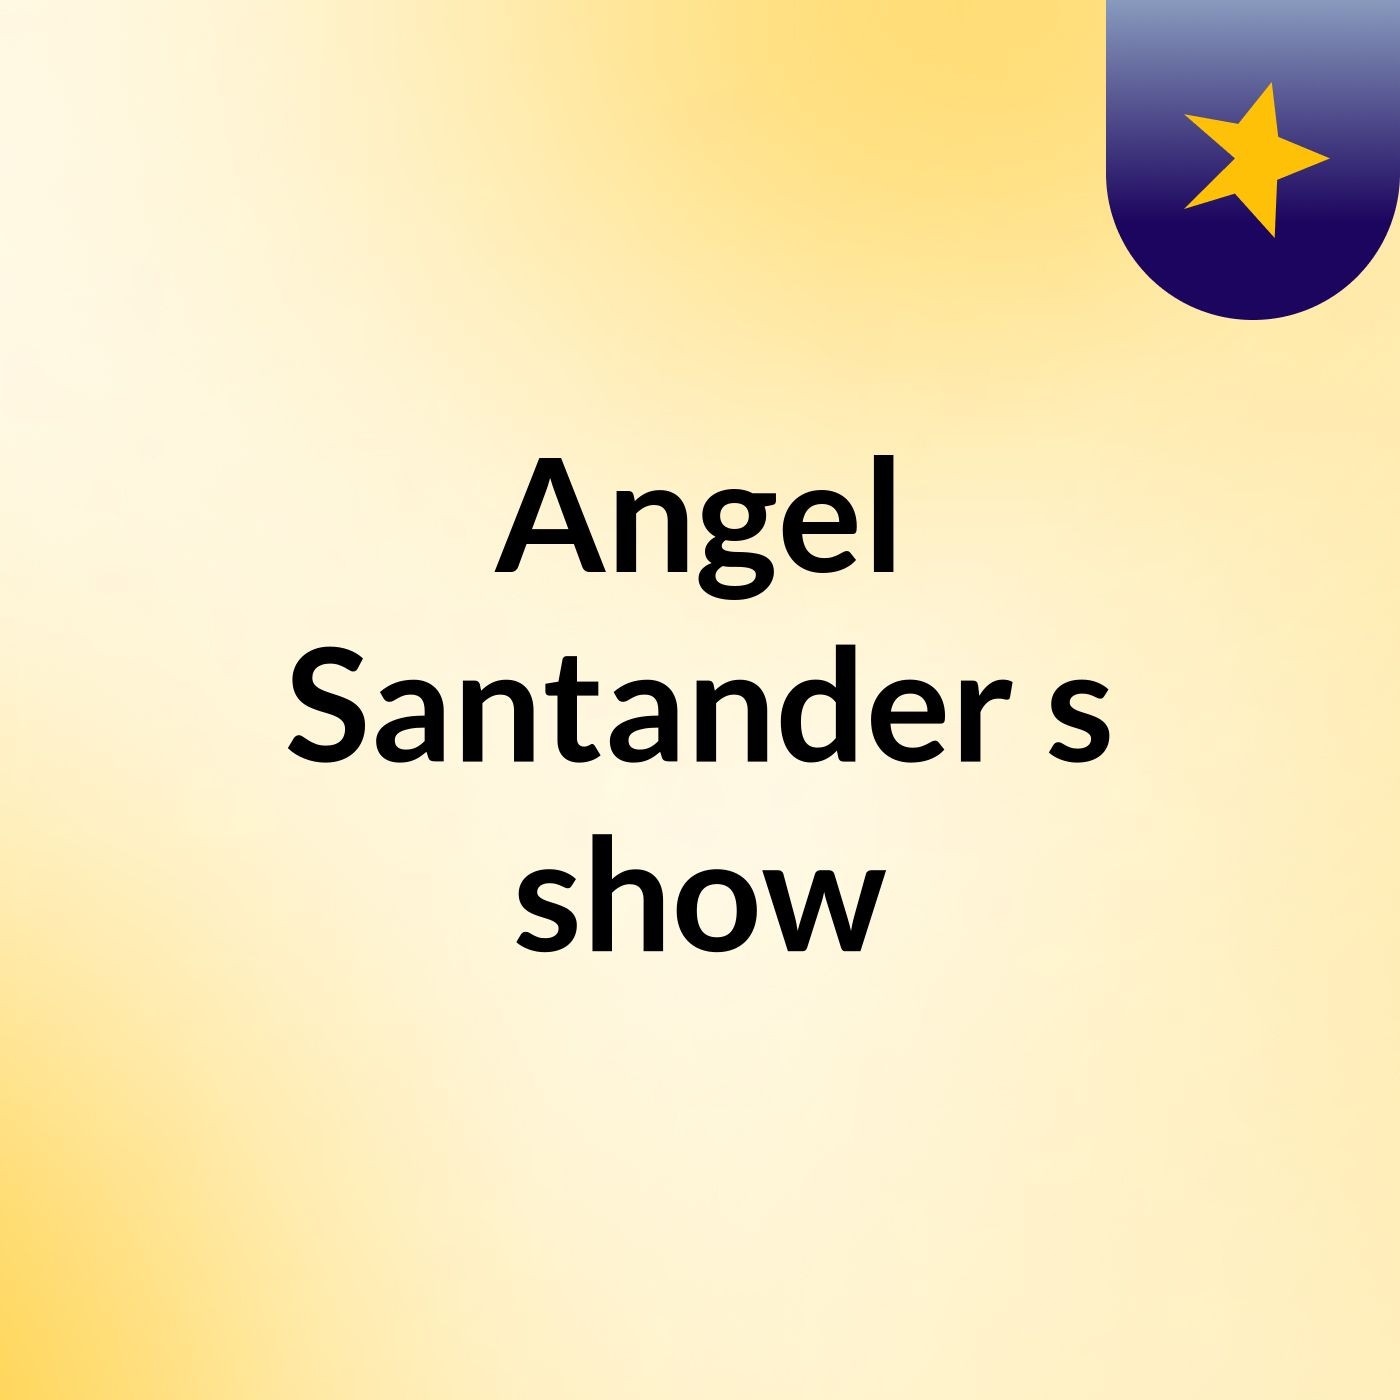 Angel Santander's show